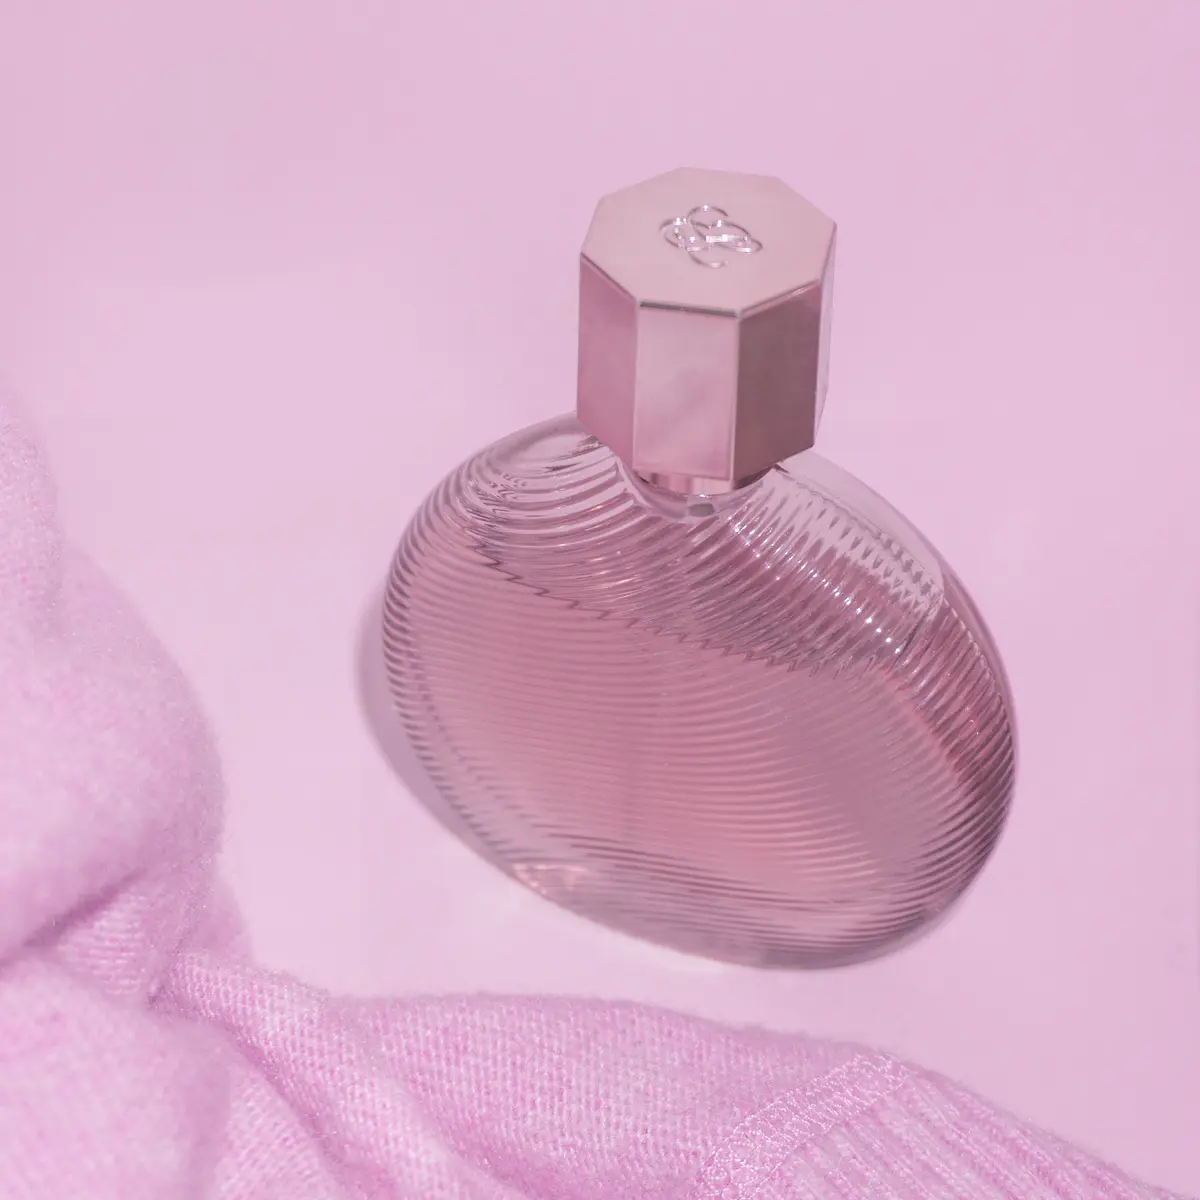 15 Rekomendasi Parfum Wanita Terbaik yang Wangi Tahan Lama